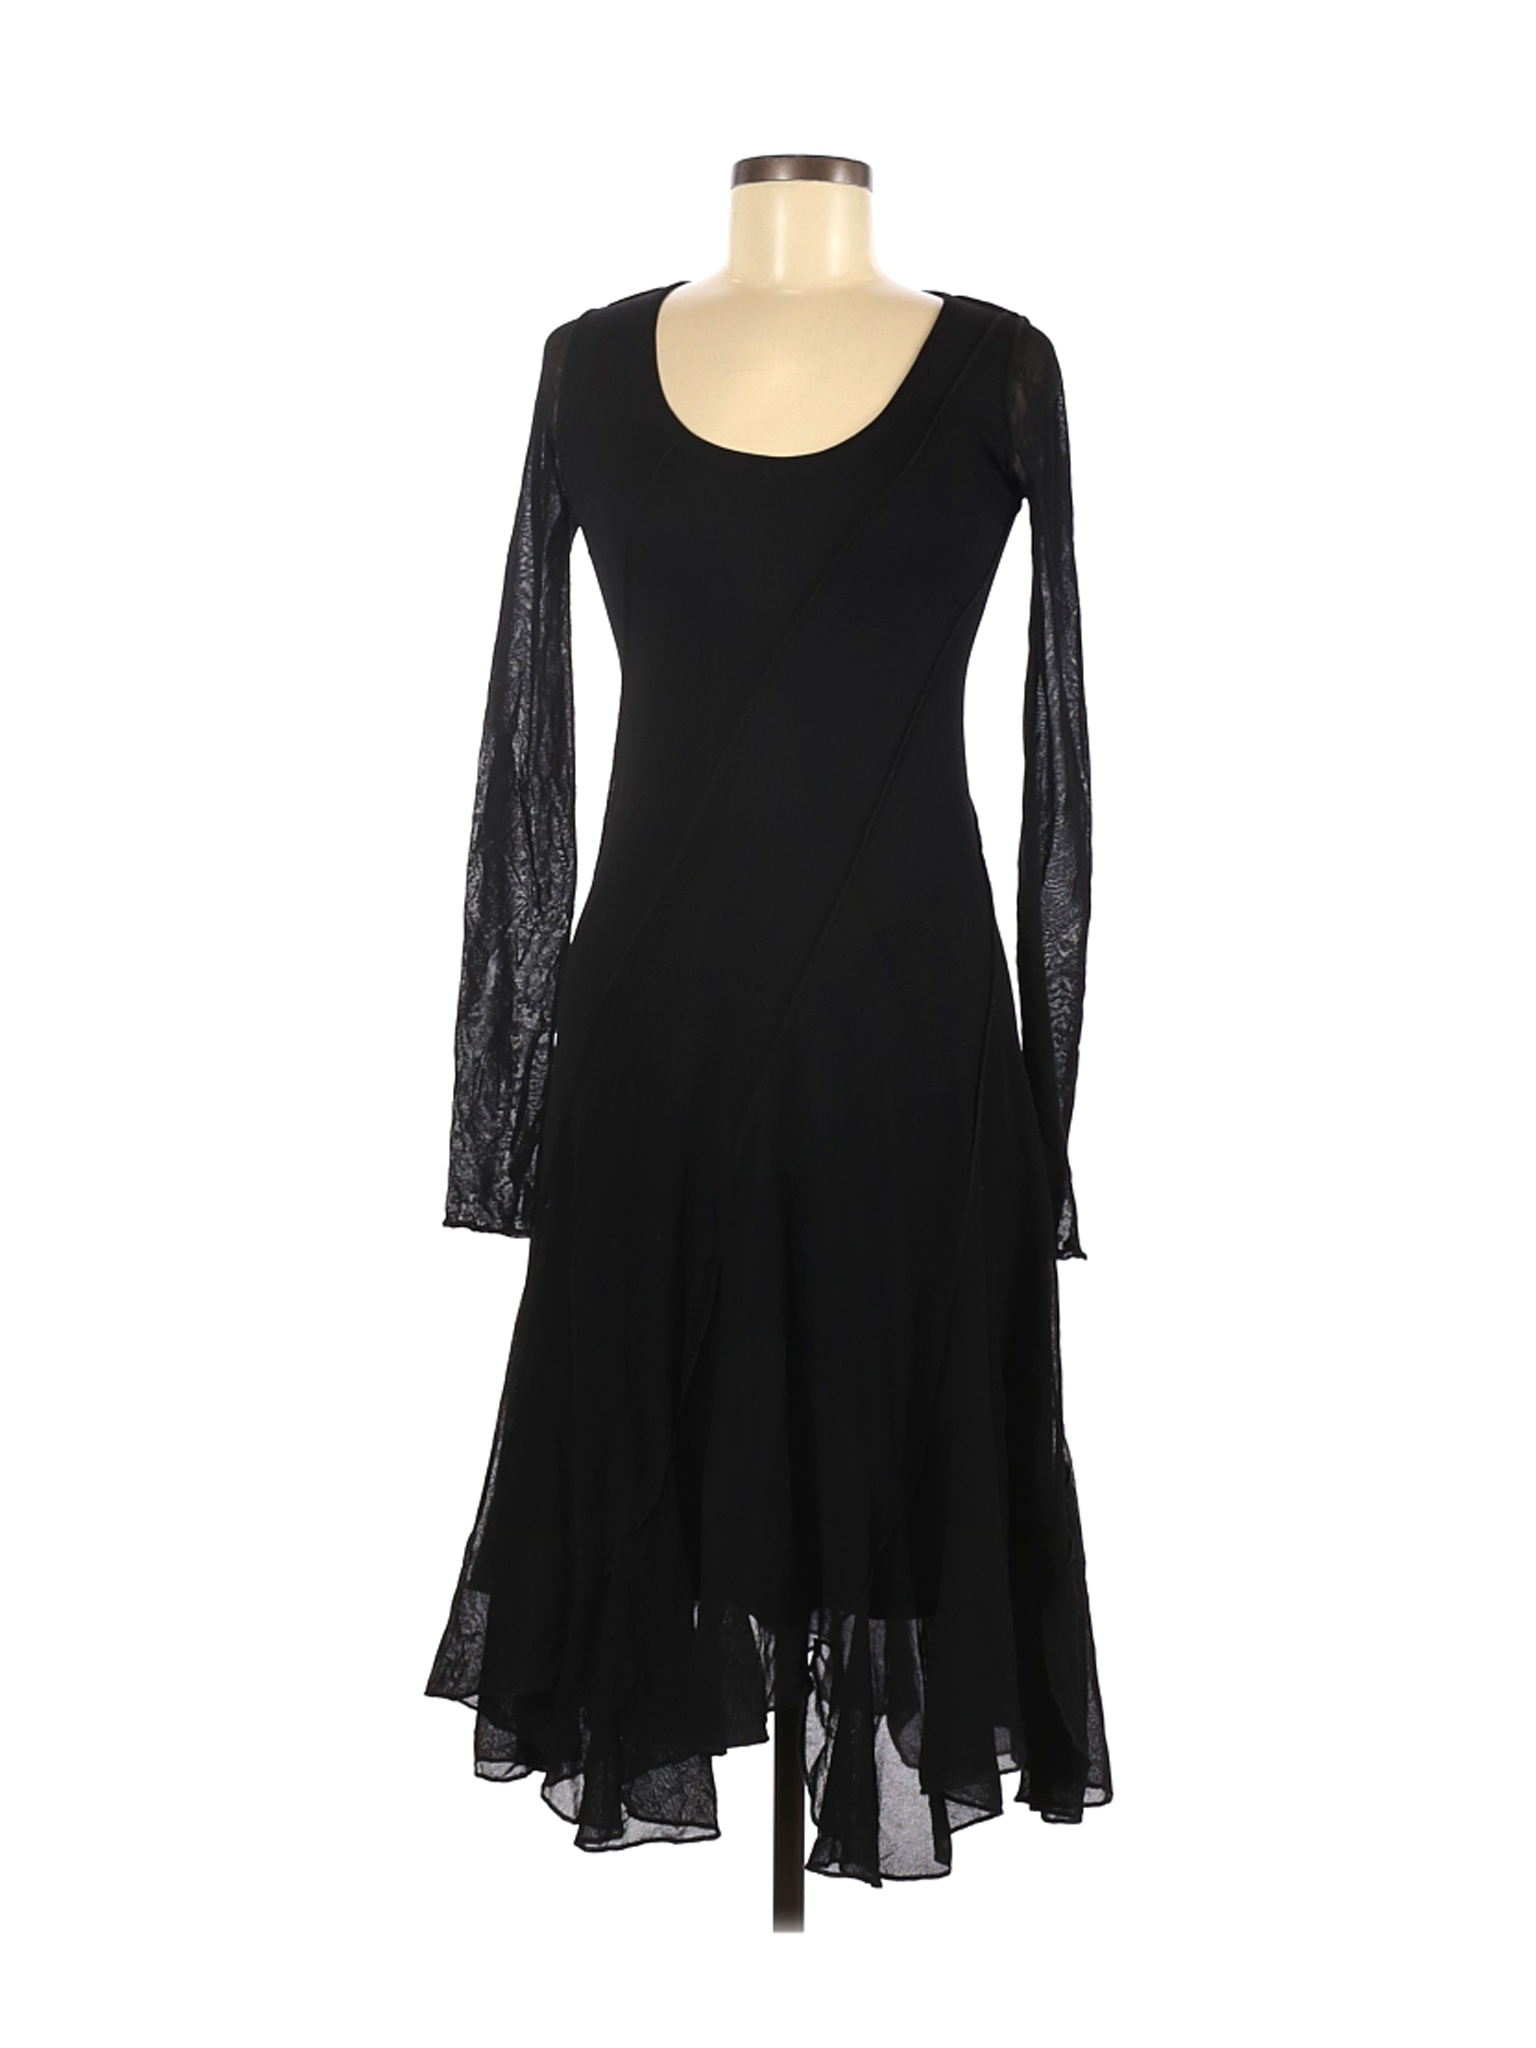 FUZZI Women Black Casual Dress L | eBay